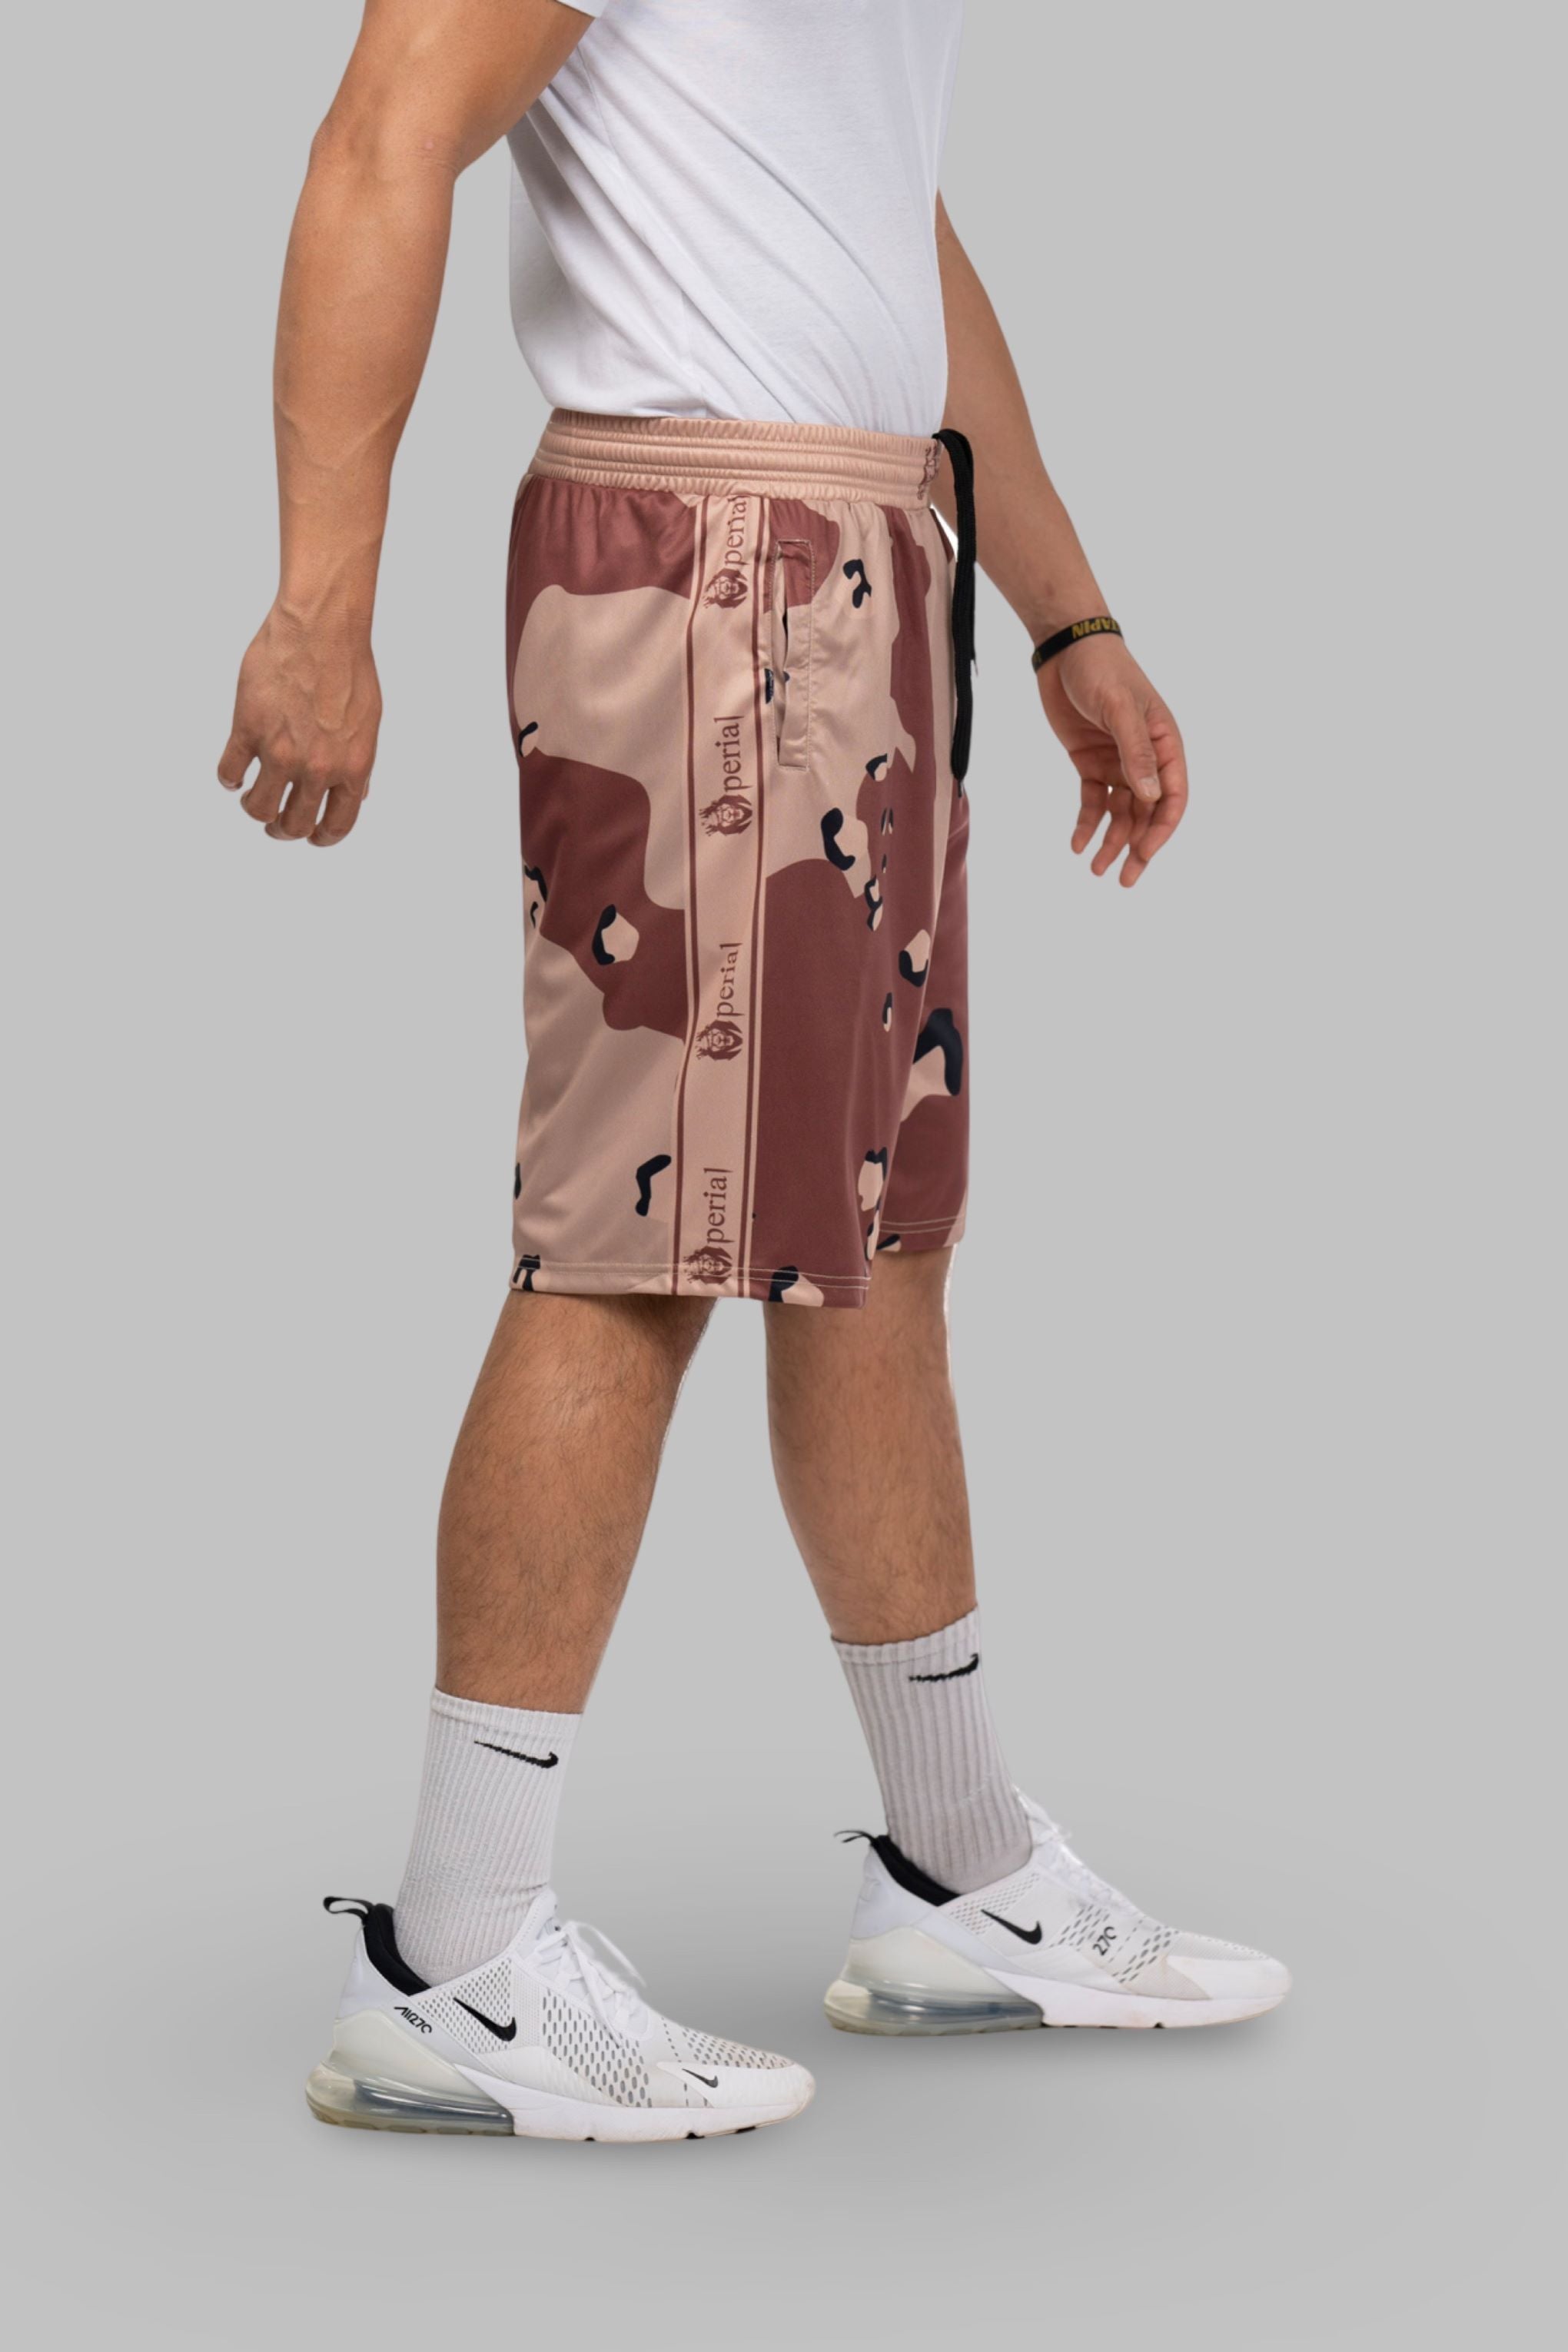 Desert Camo Shorts